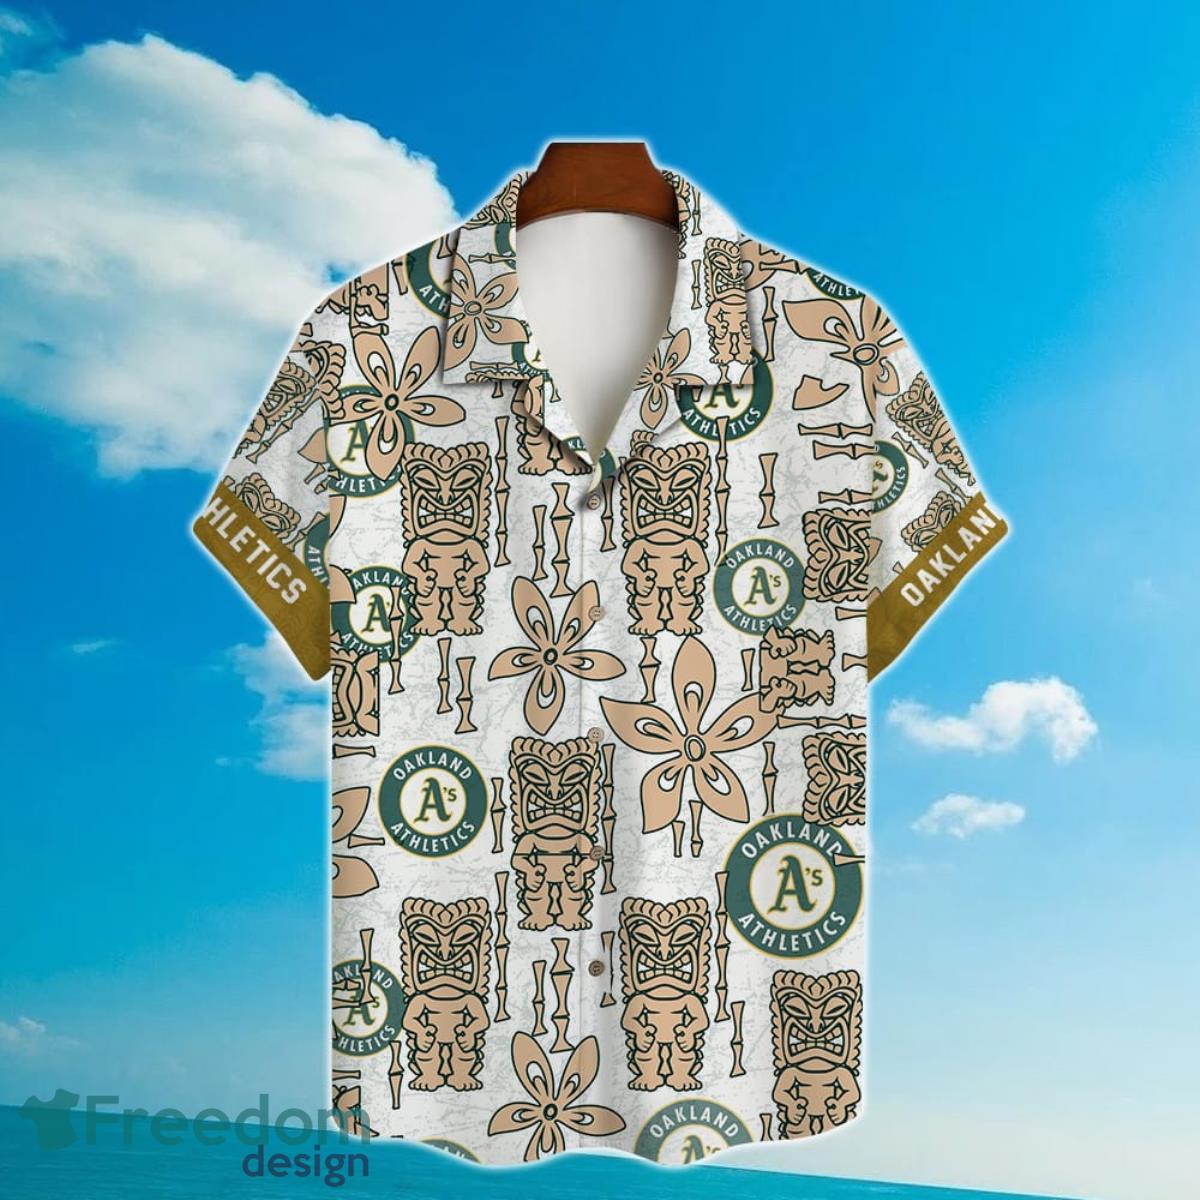 New York Mets Major League Baseball 3D Print Aloha Hawaiian Shirt -  Freedomdesign